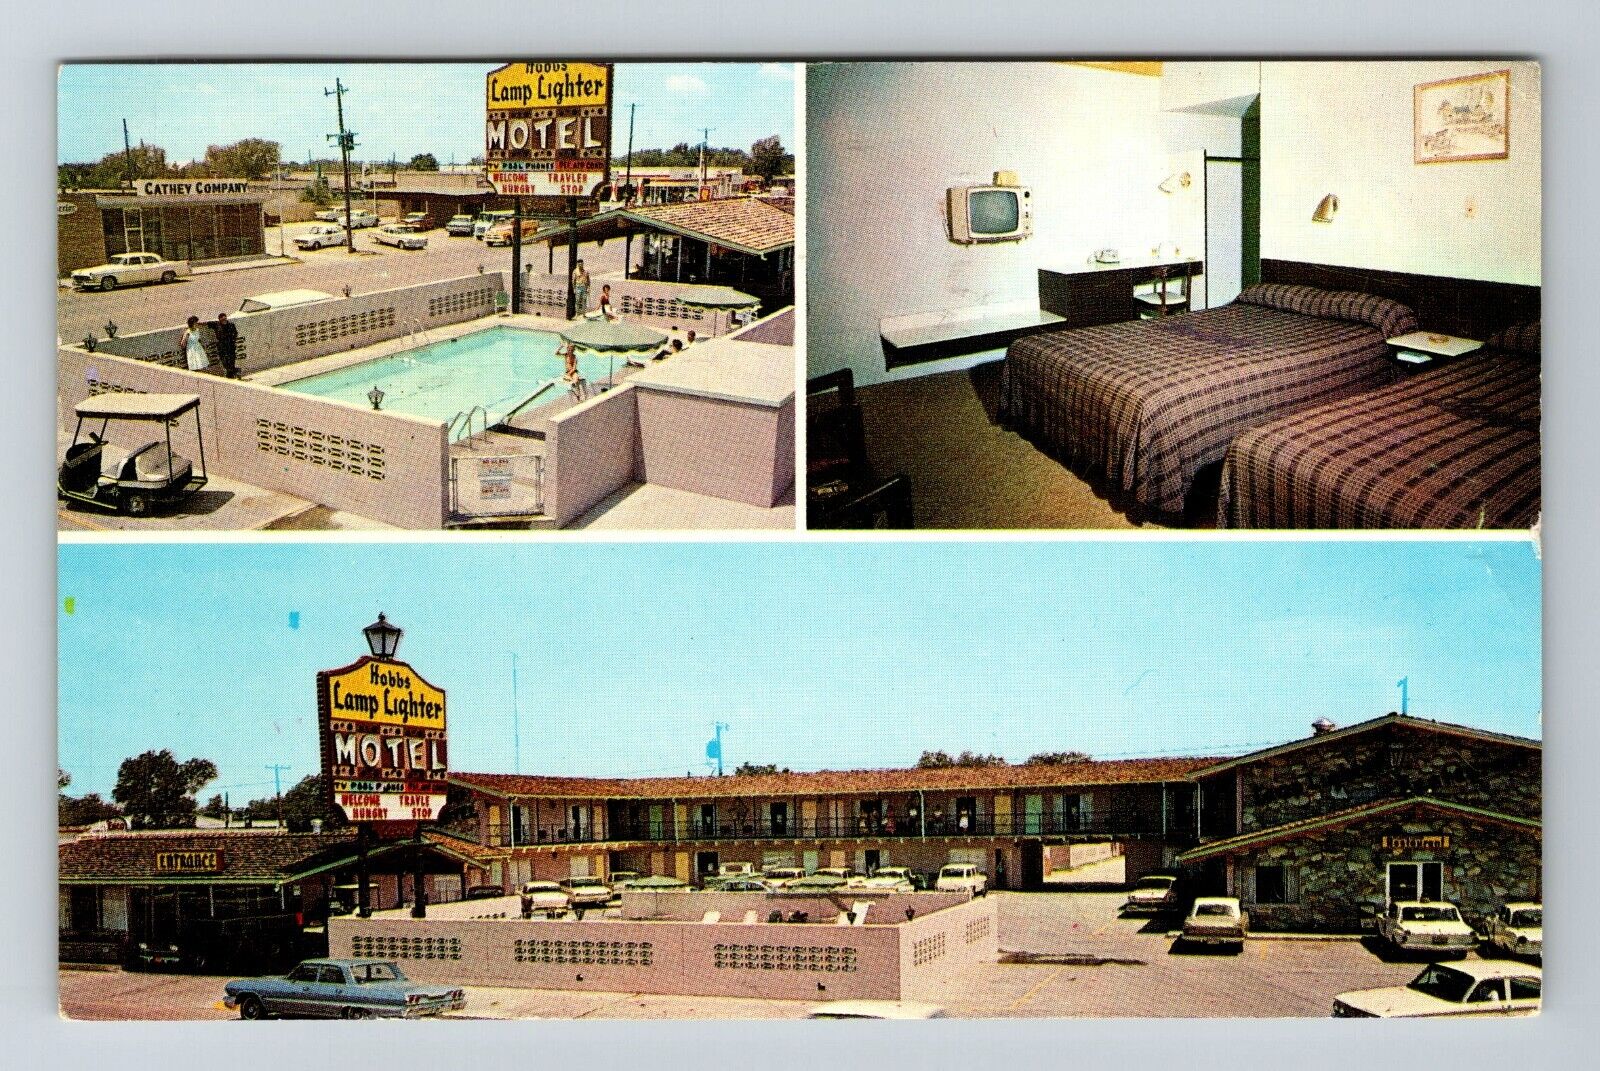 Hobbs NM-New Mexico, Hobbs Lamplighter Motel, Advert, Vintage Postcard